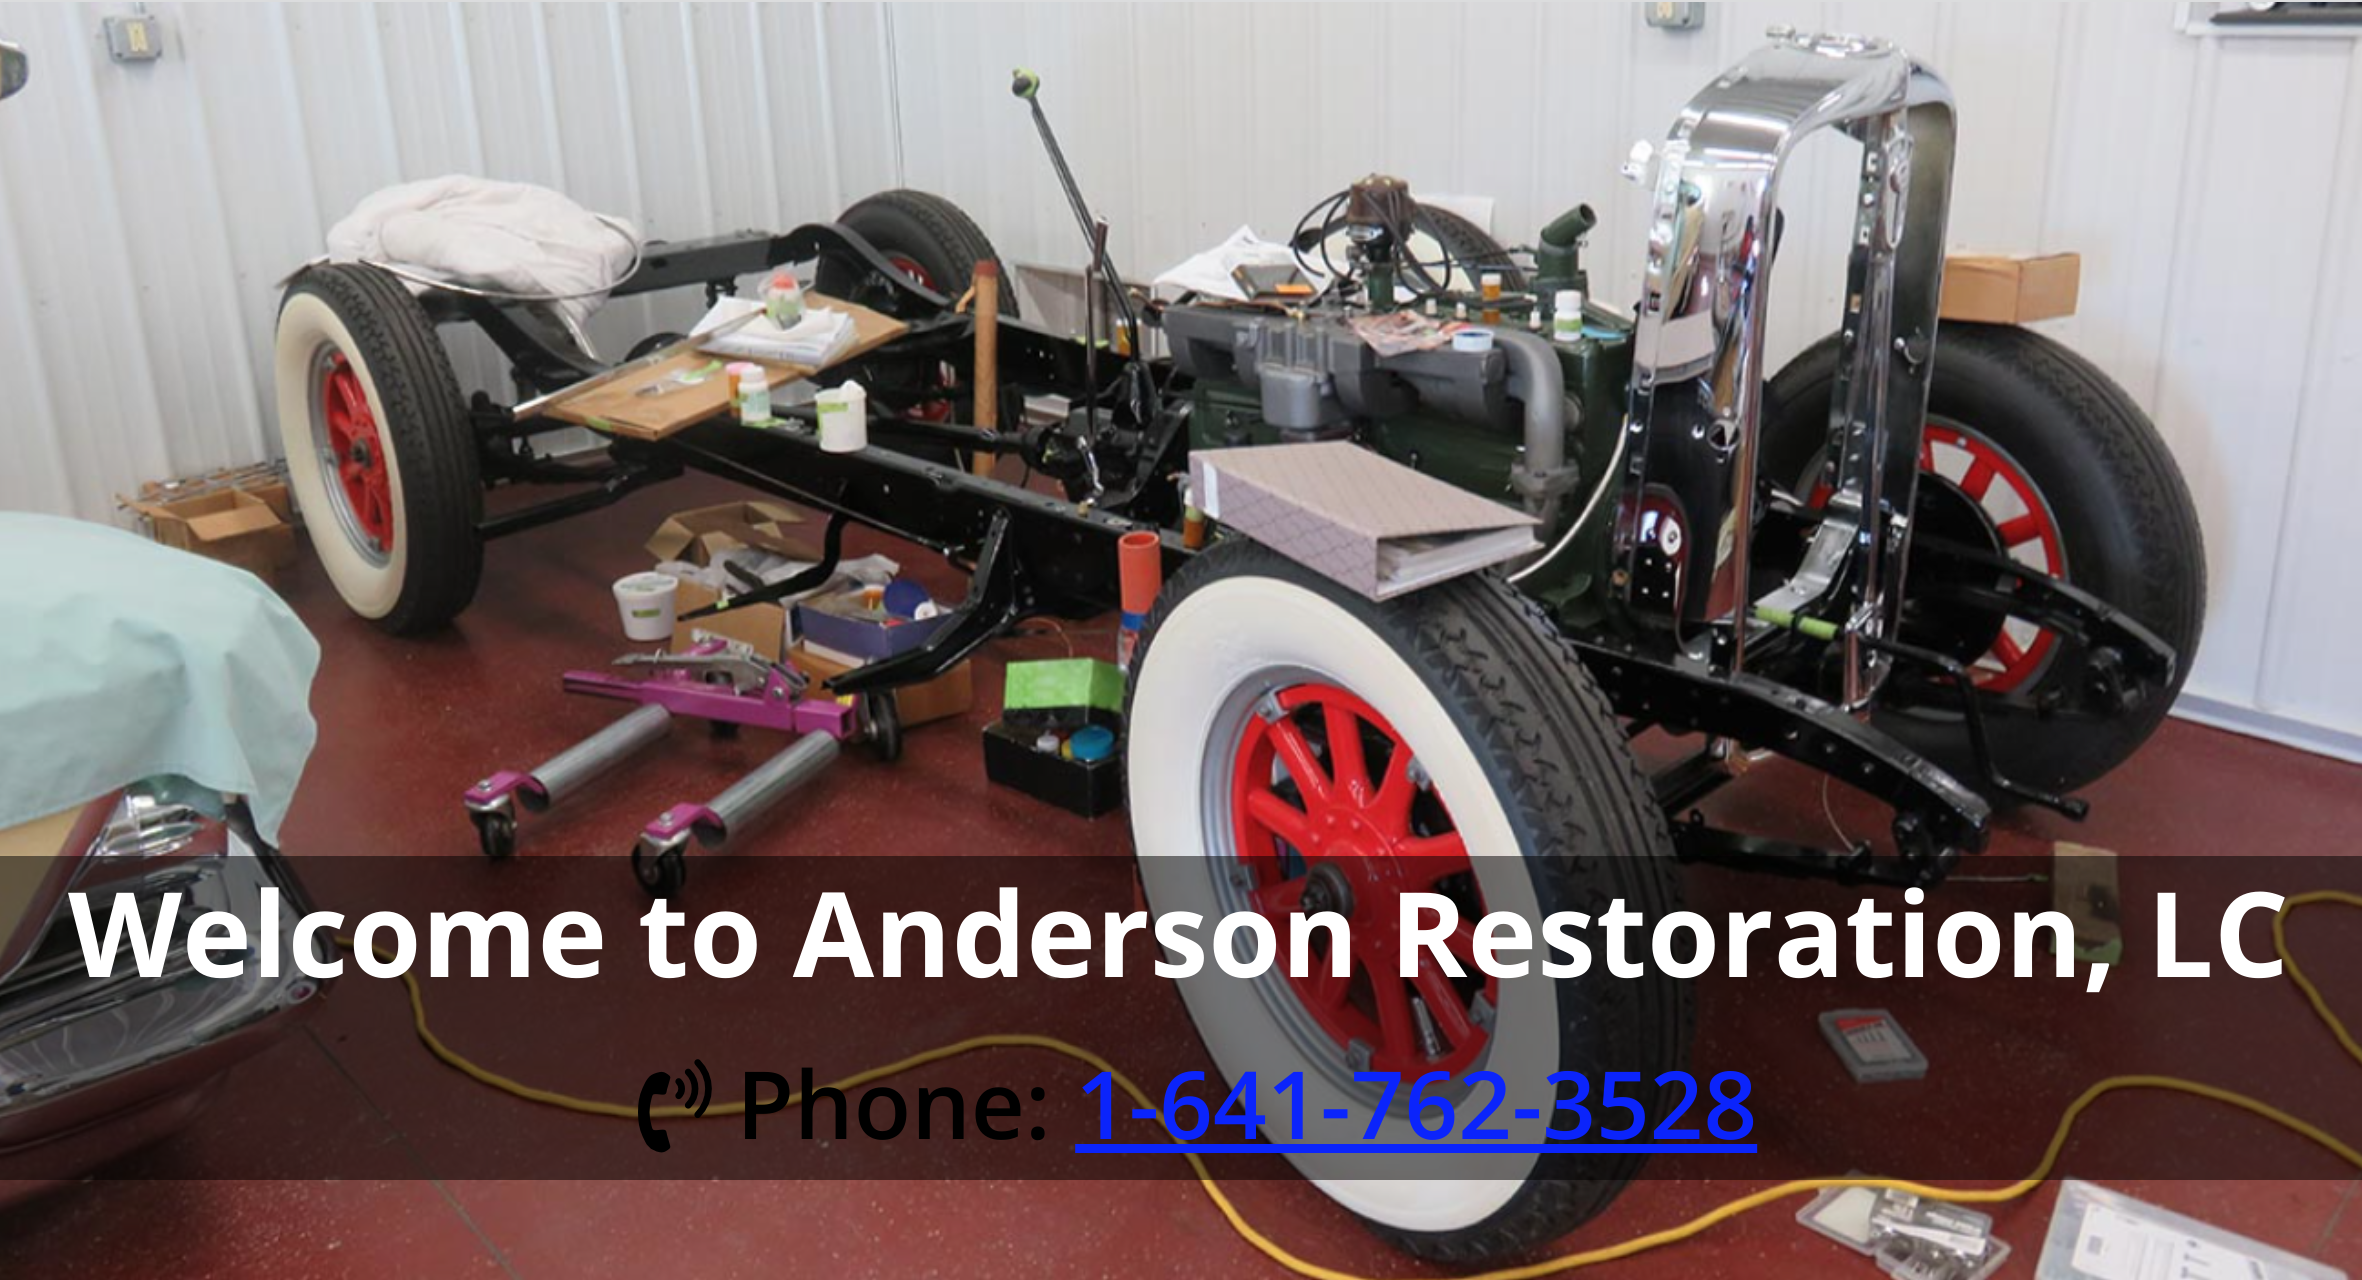 Anderson Restoration, LC